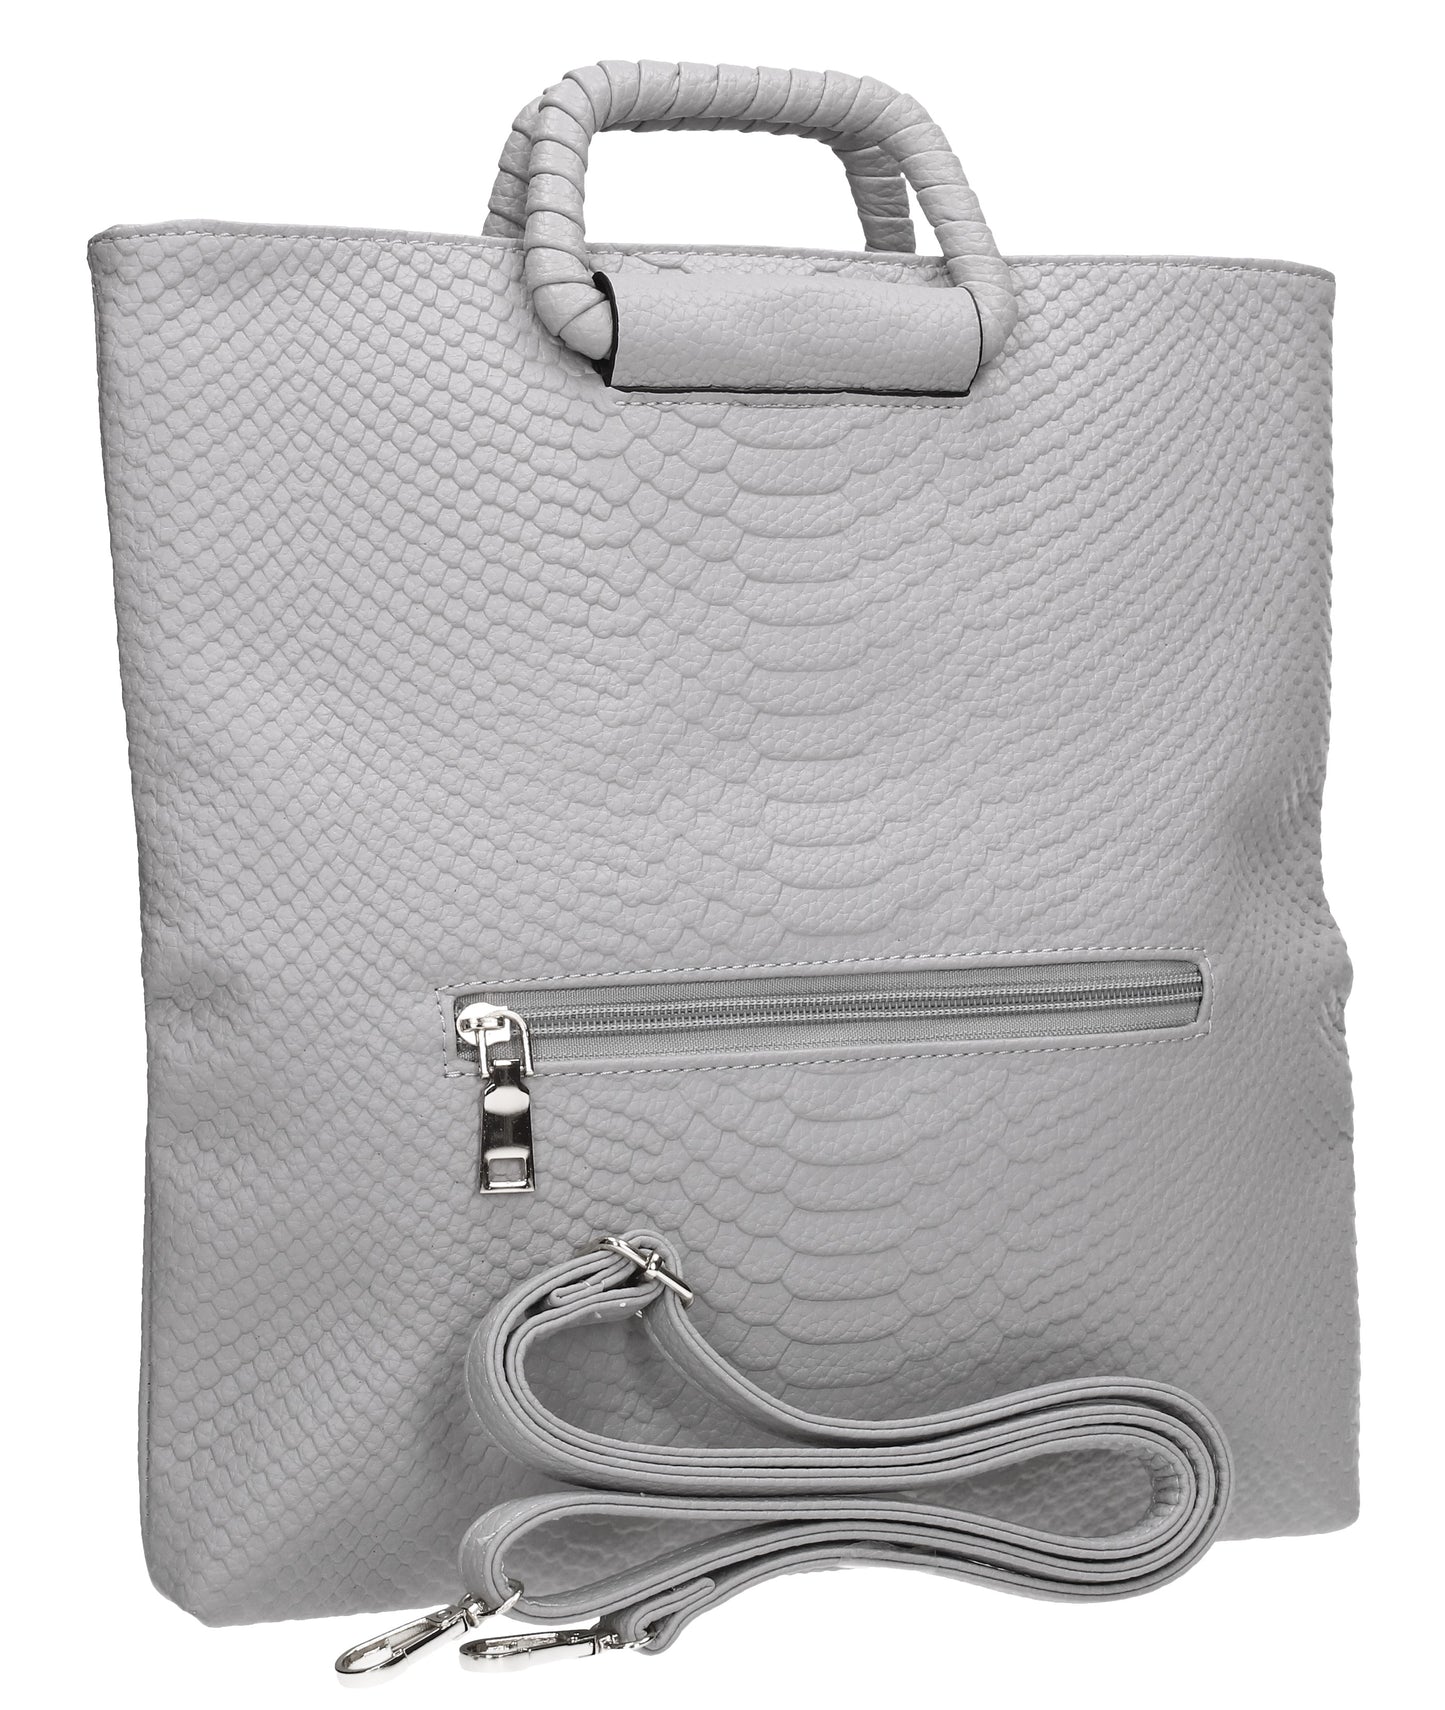 SWANKYSWANS Kara Fold Over Clutch Bag Grey Cute Cheap Clutch Bag For Weddings School and Work